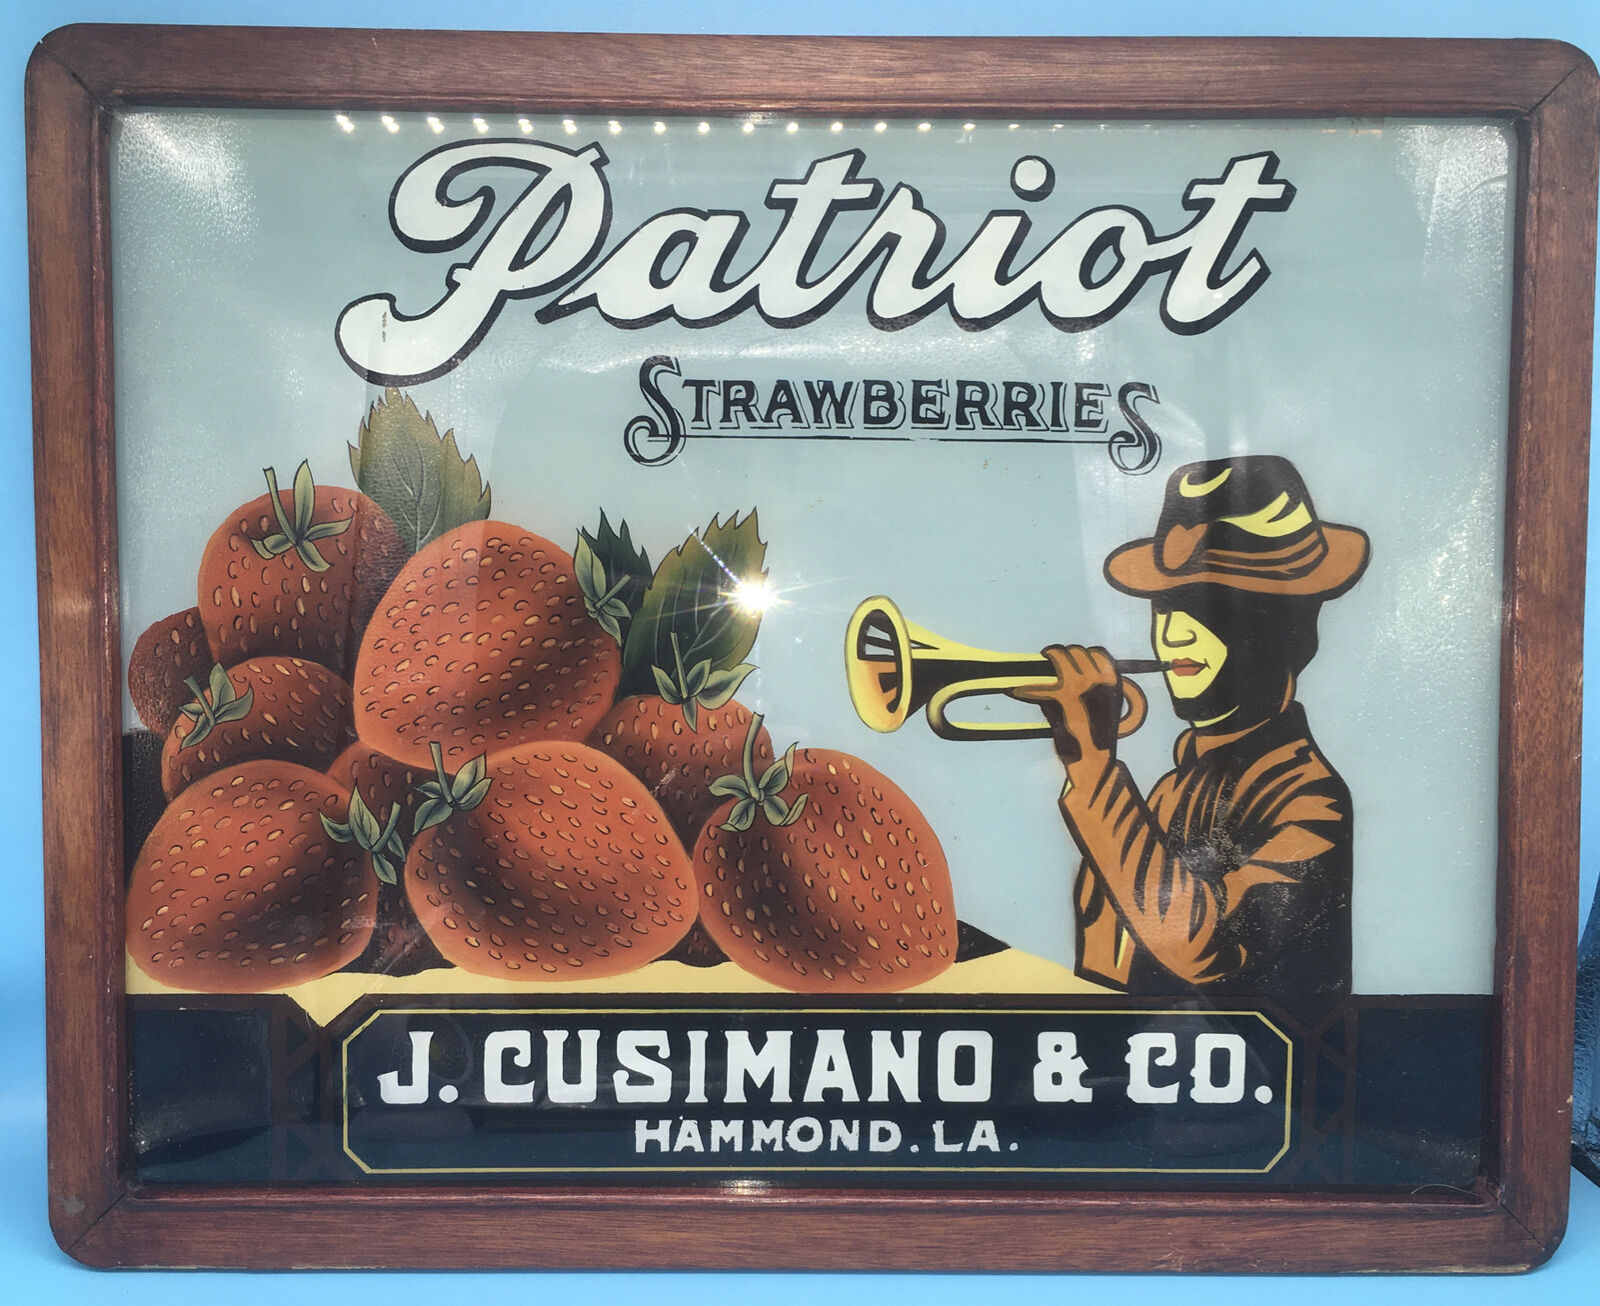 Orignal Patriot Strawberries J. Cusimano & Co. Advertising Poster (rare)